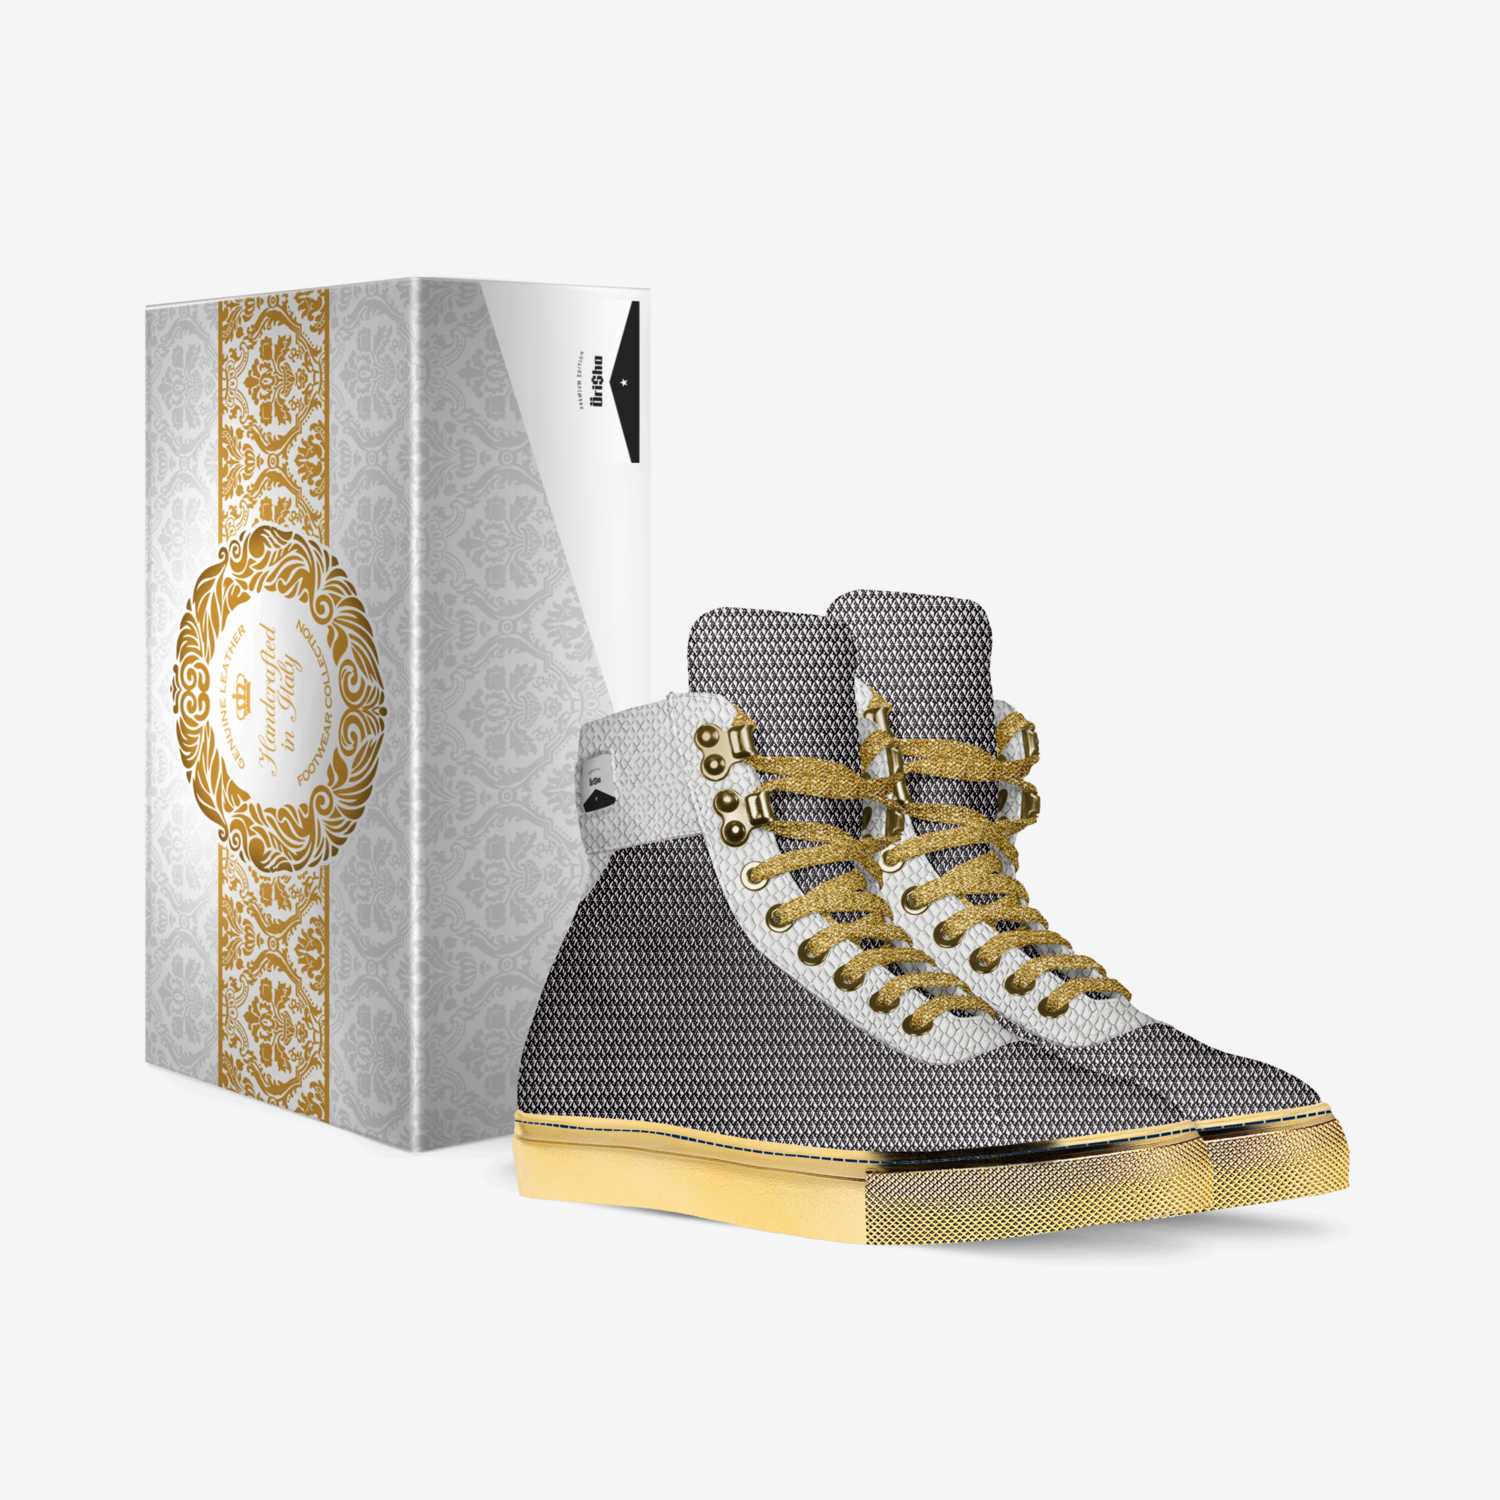 Öri$ha custom made in Italy shoes by Grand Sheba | Box view